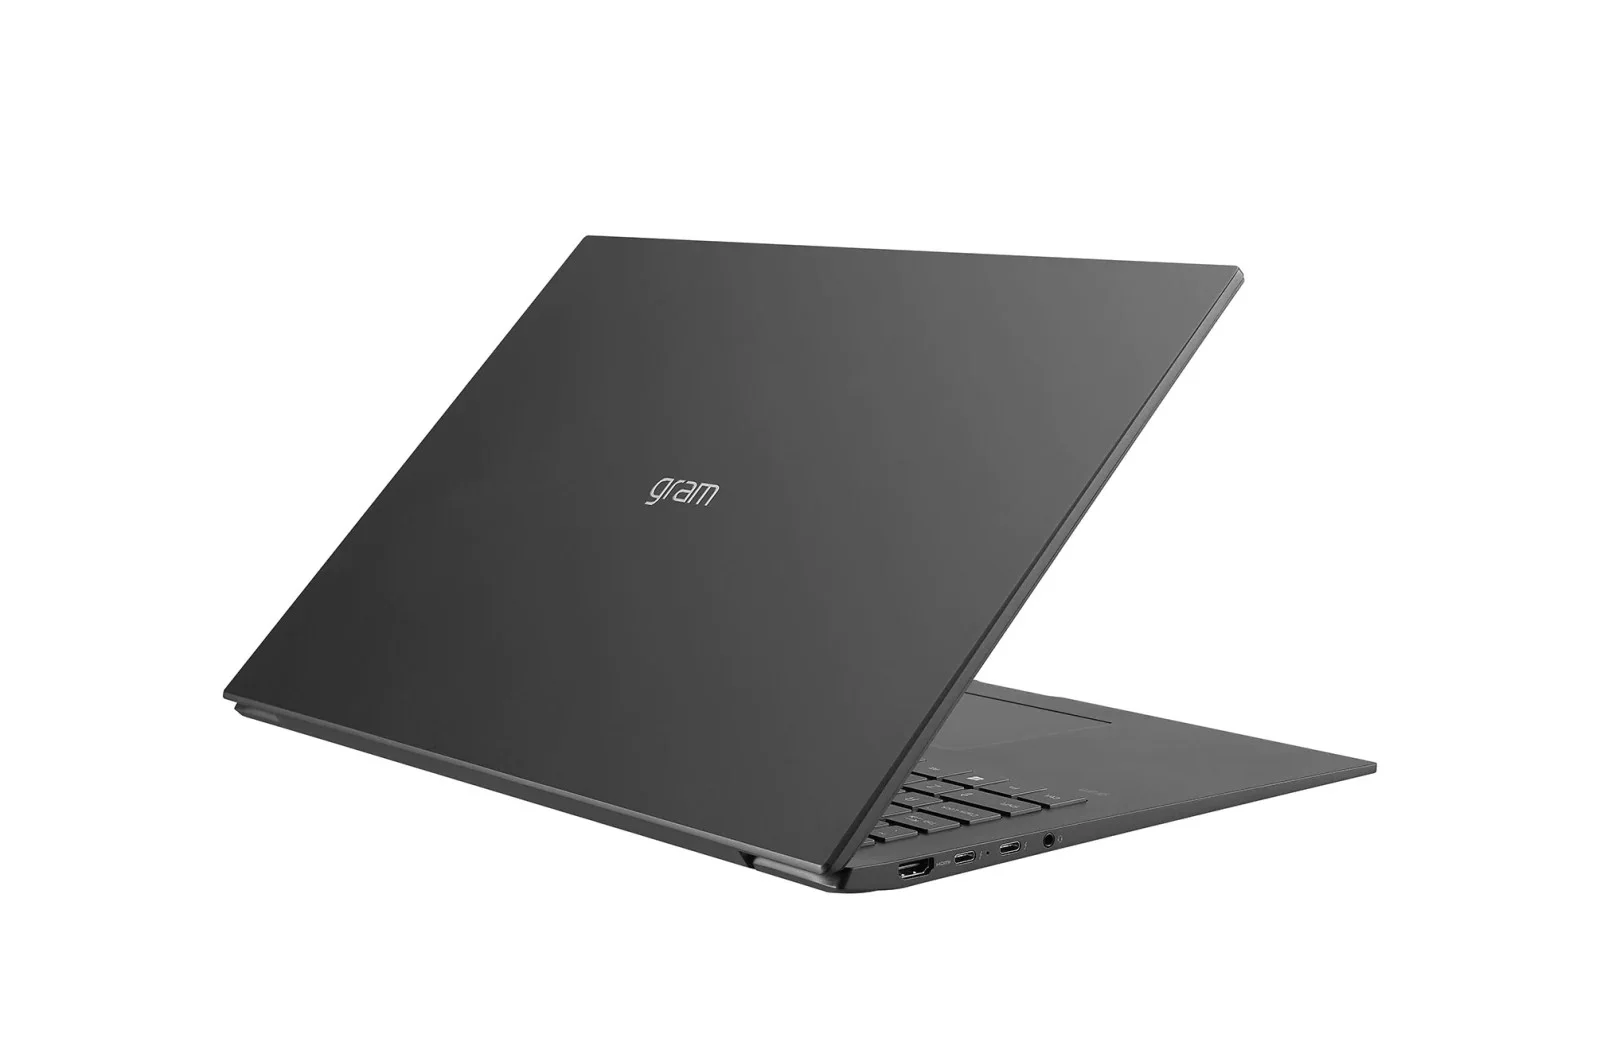 LG вернулась на рынок ноутбуков с LG Gram весом 1 кг - фото 3